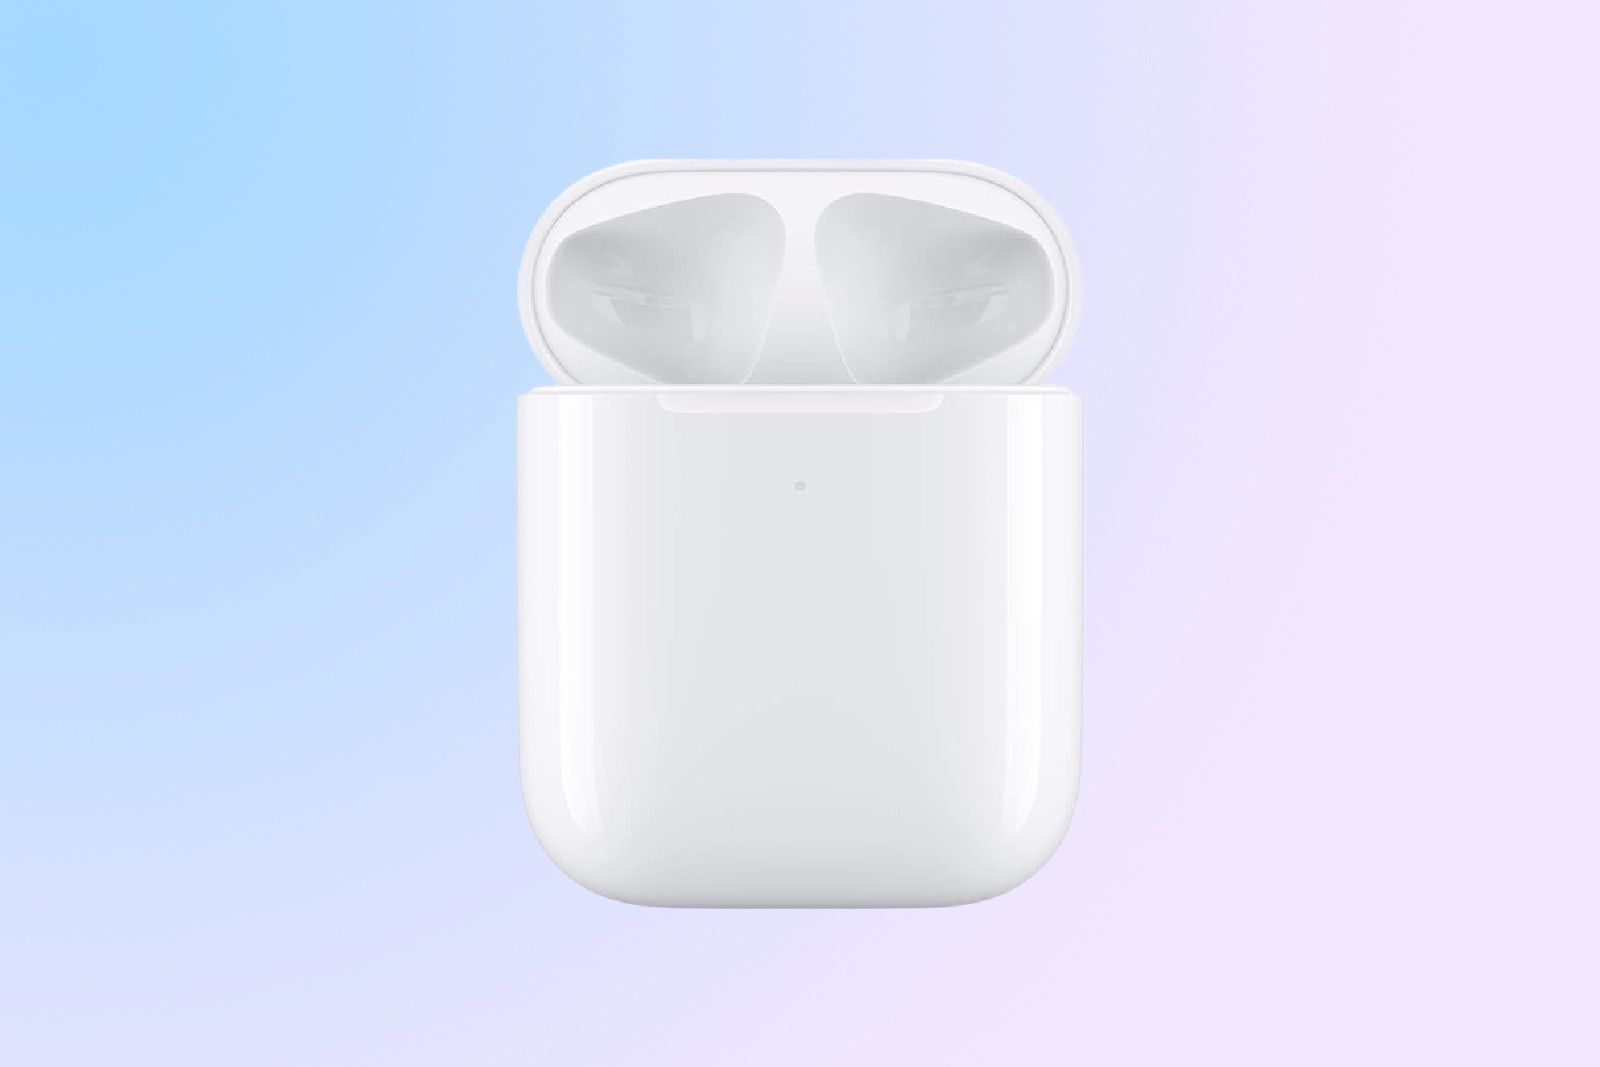 Apple wireless charging case